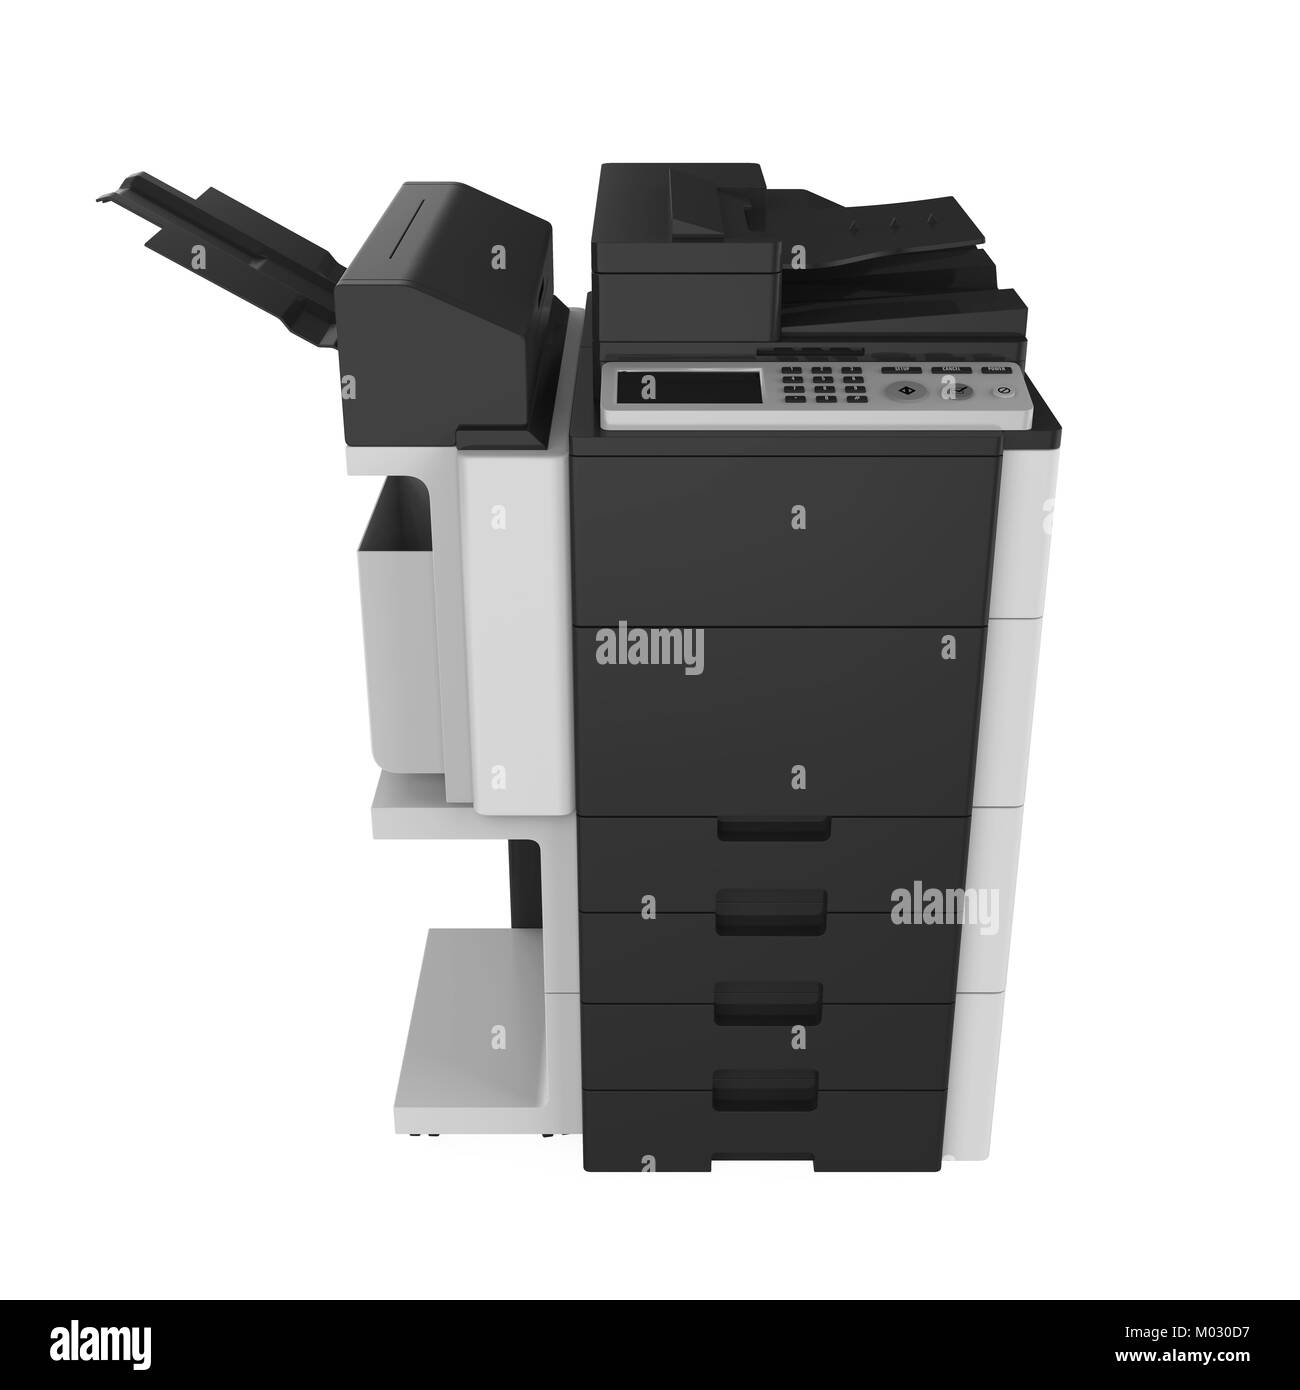 Office Multifunction Printer Isolated Stock Photo